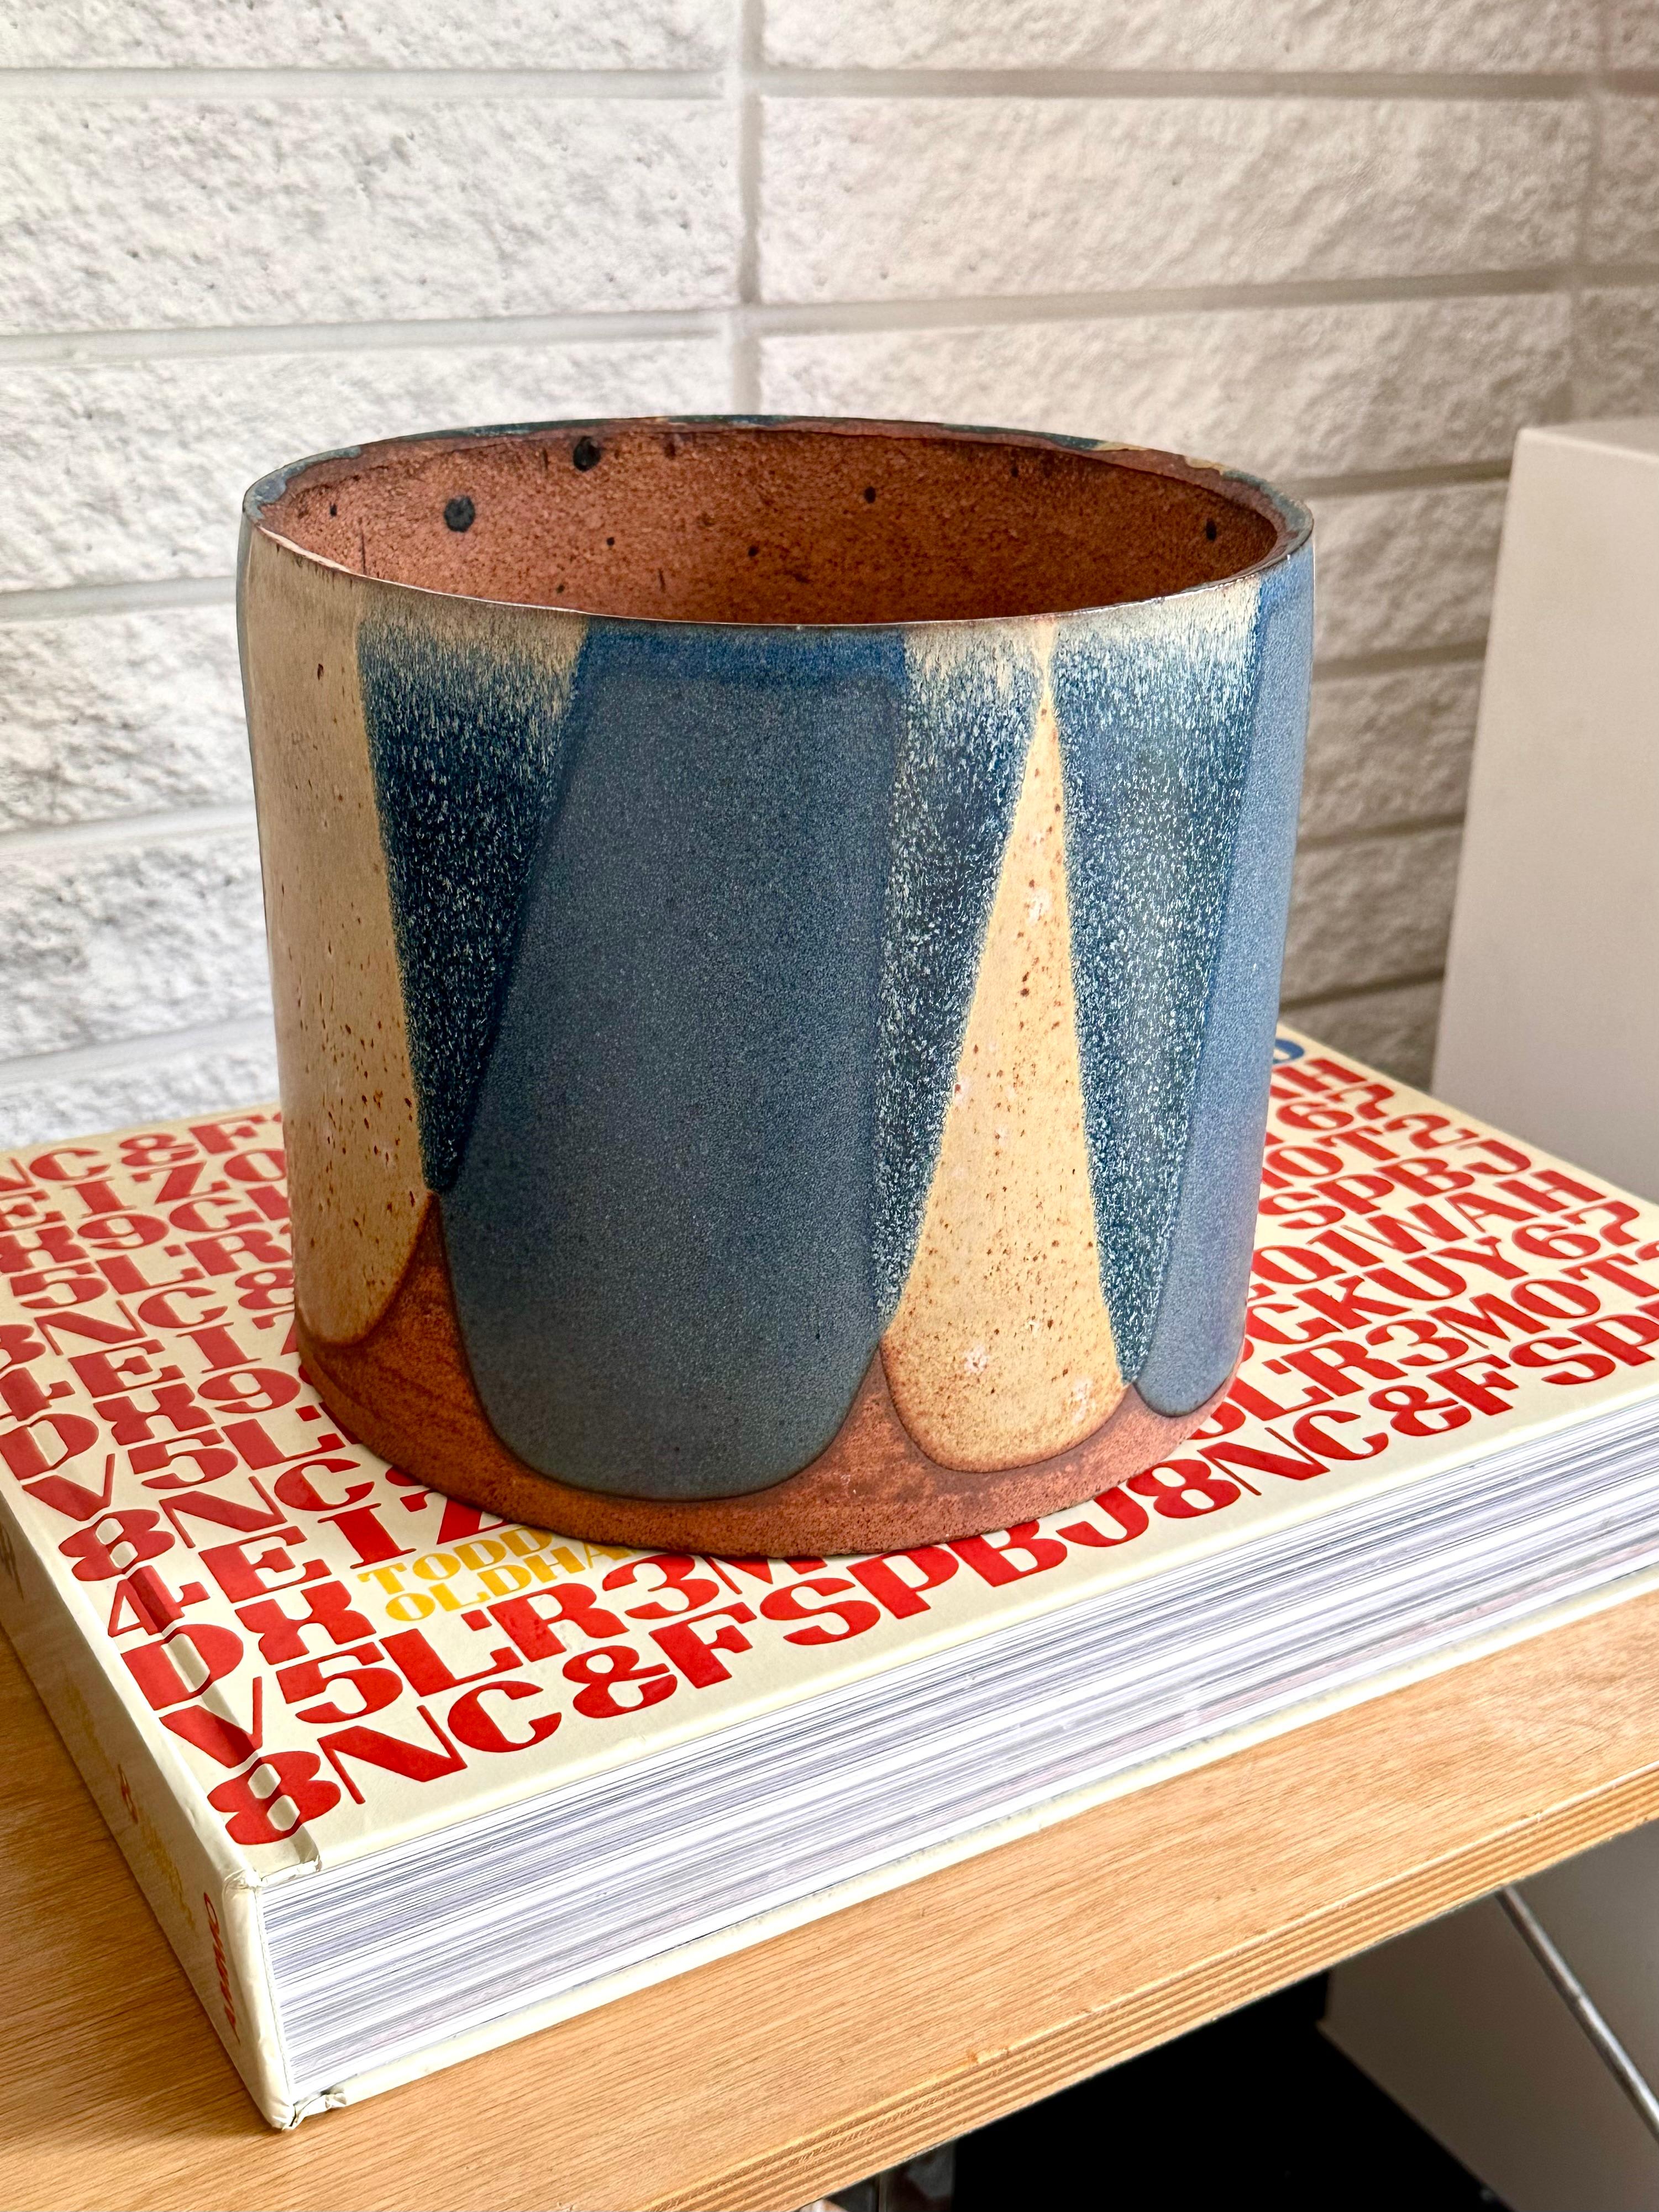 David Cressey Architectural Pottery Pro Artisan Flame Glaze Stoneware Planter 1